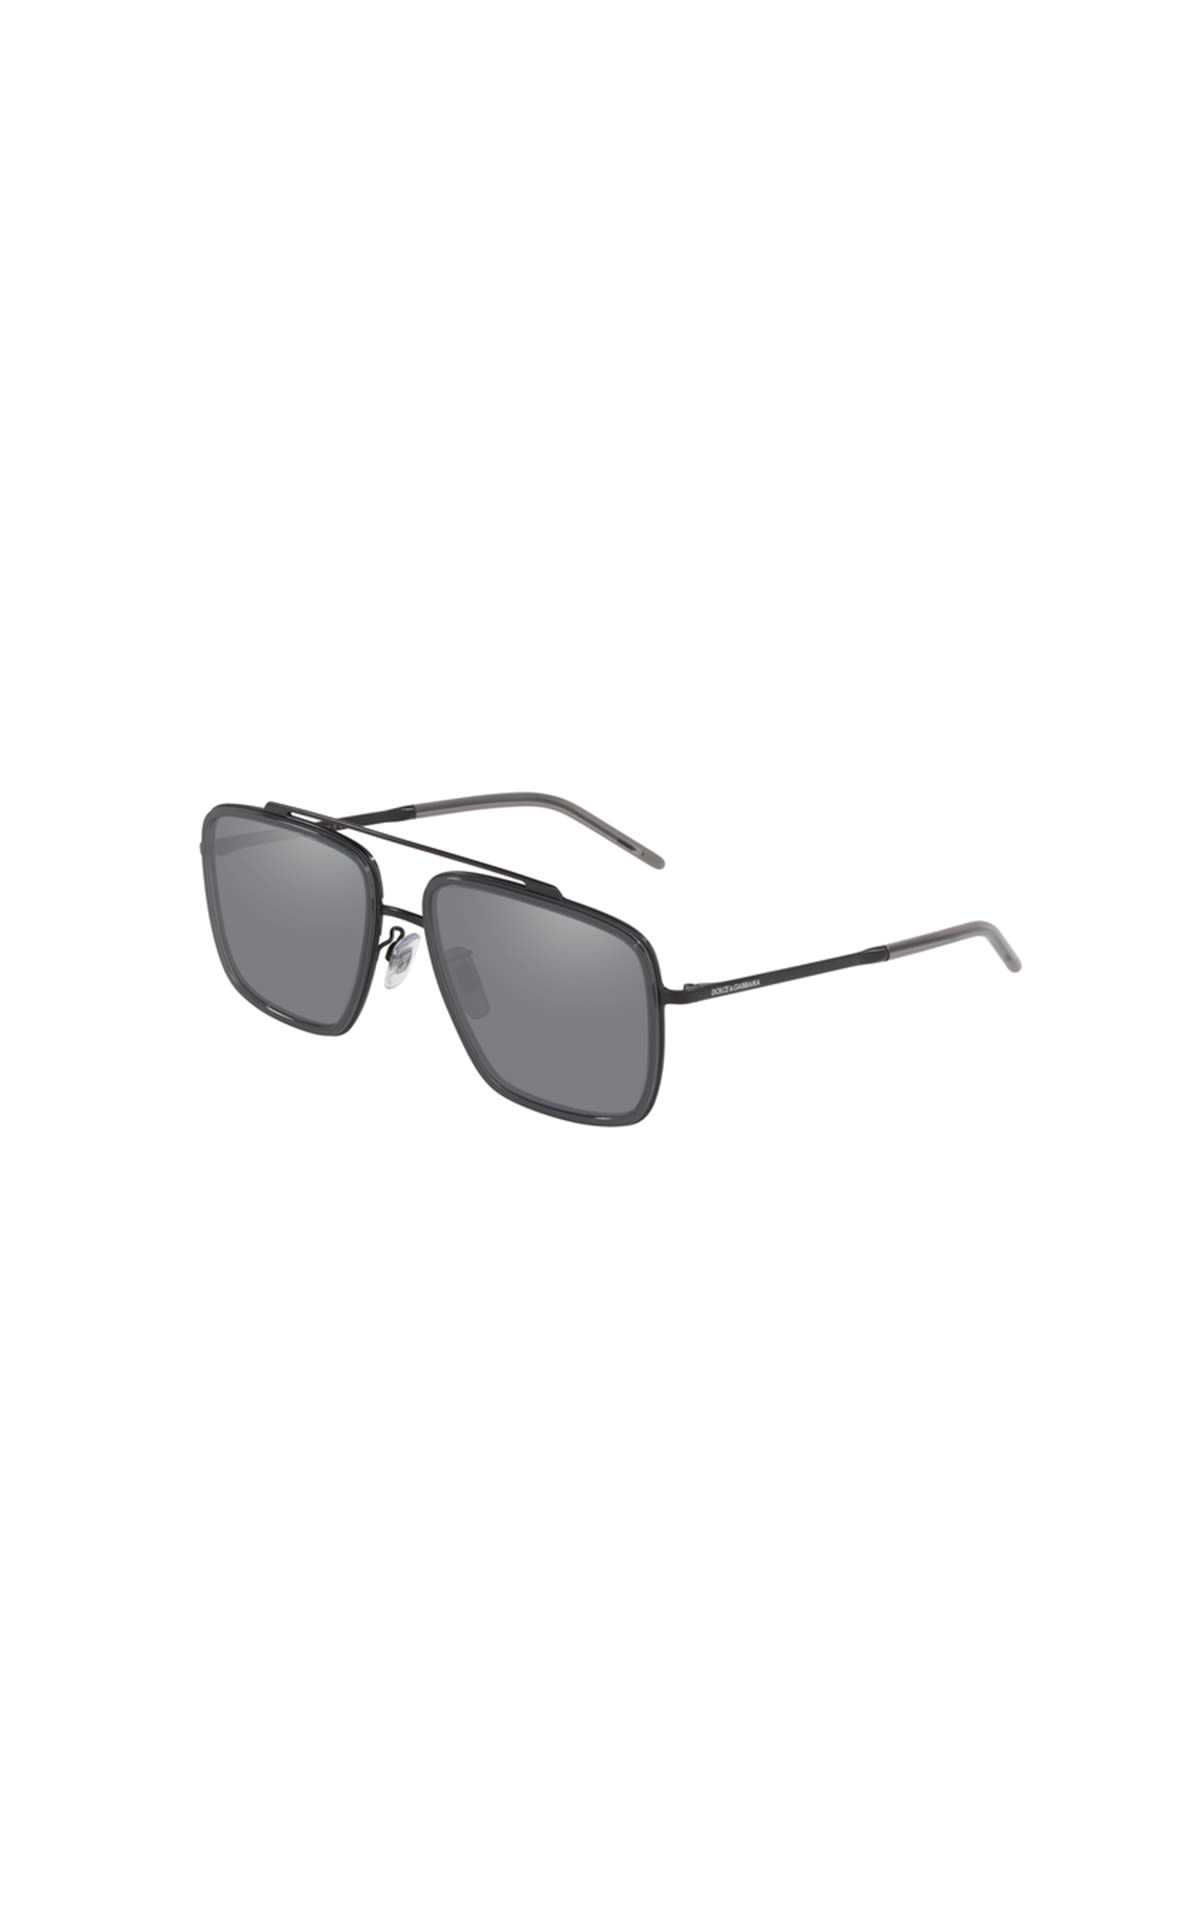 Black square sunglasses for men SunglassHut